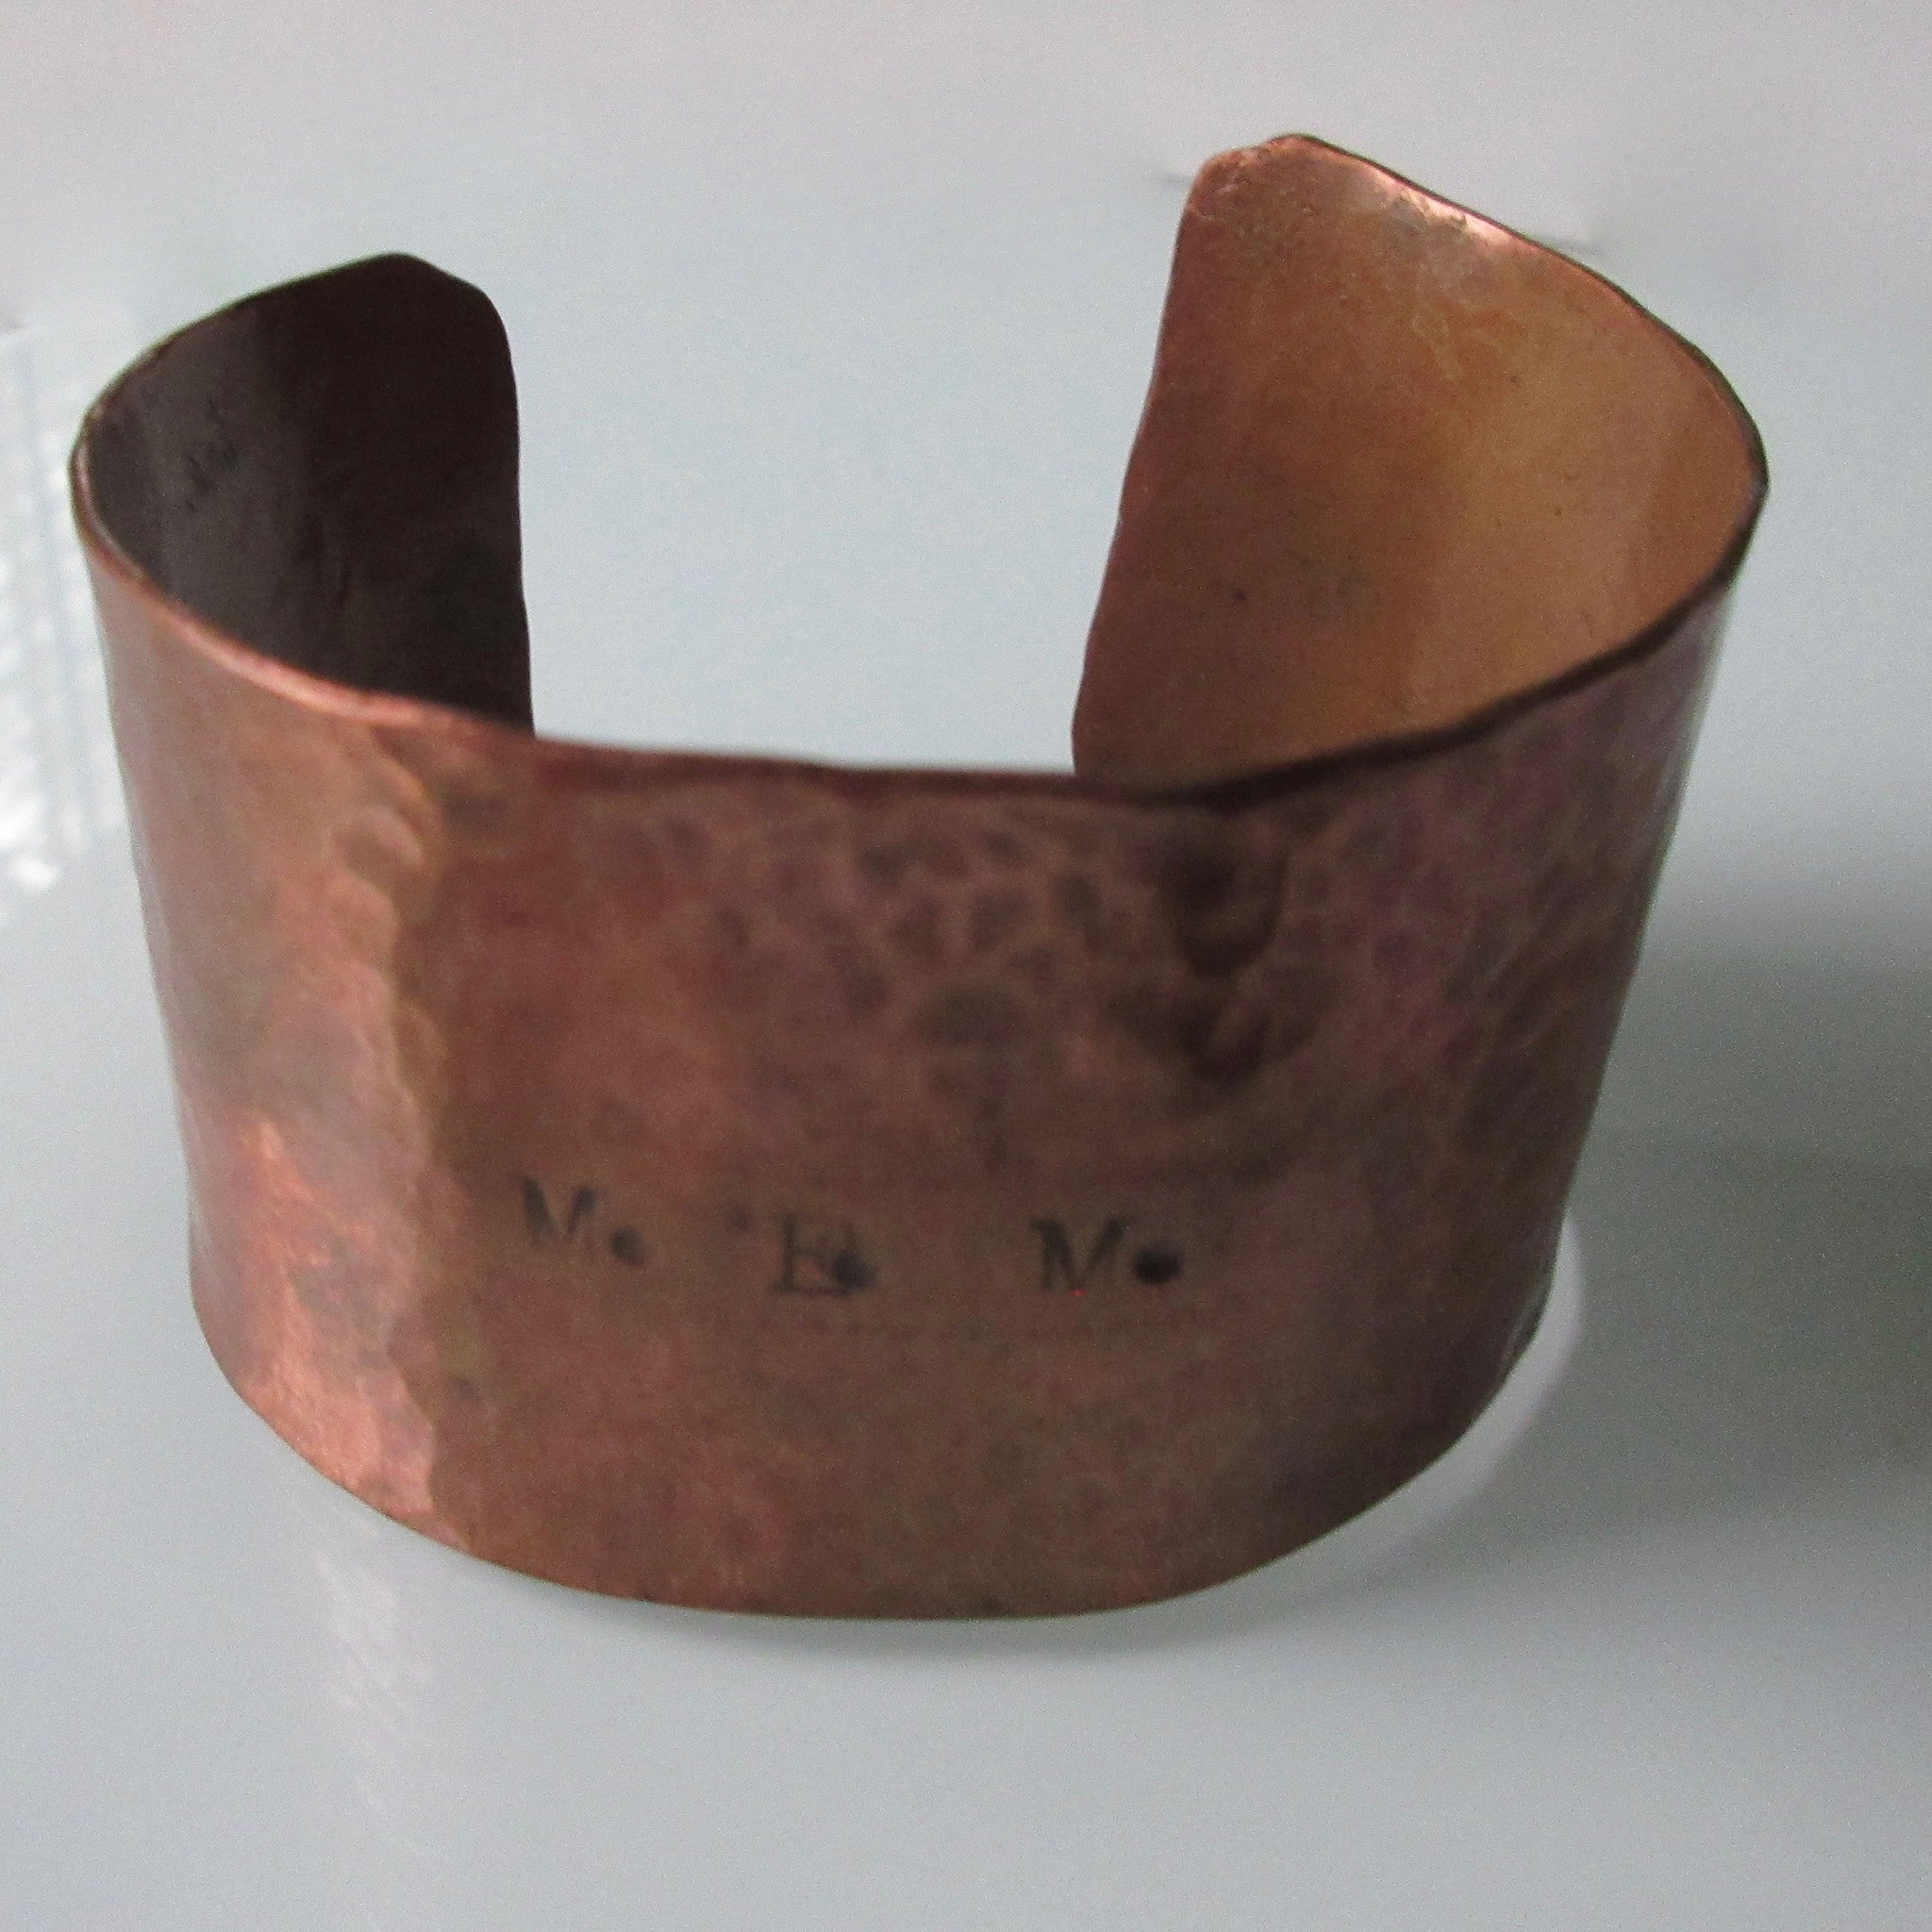 Hand Made Hammered Vintage Copper Cuff